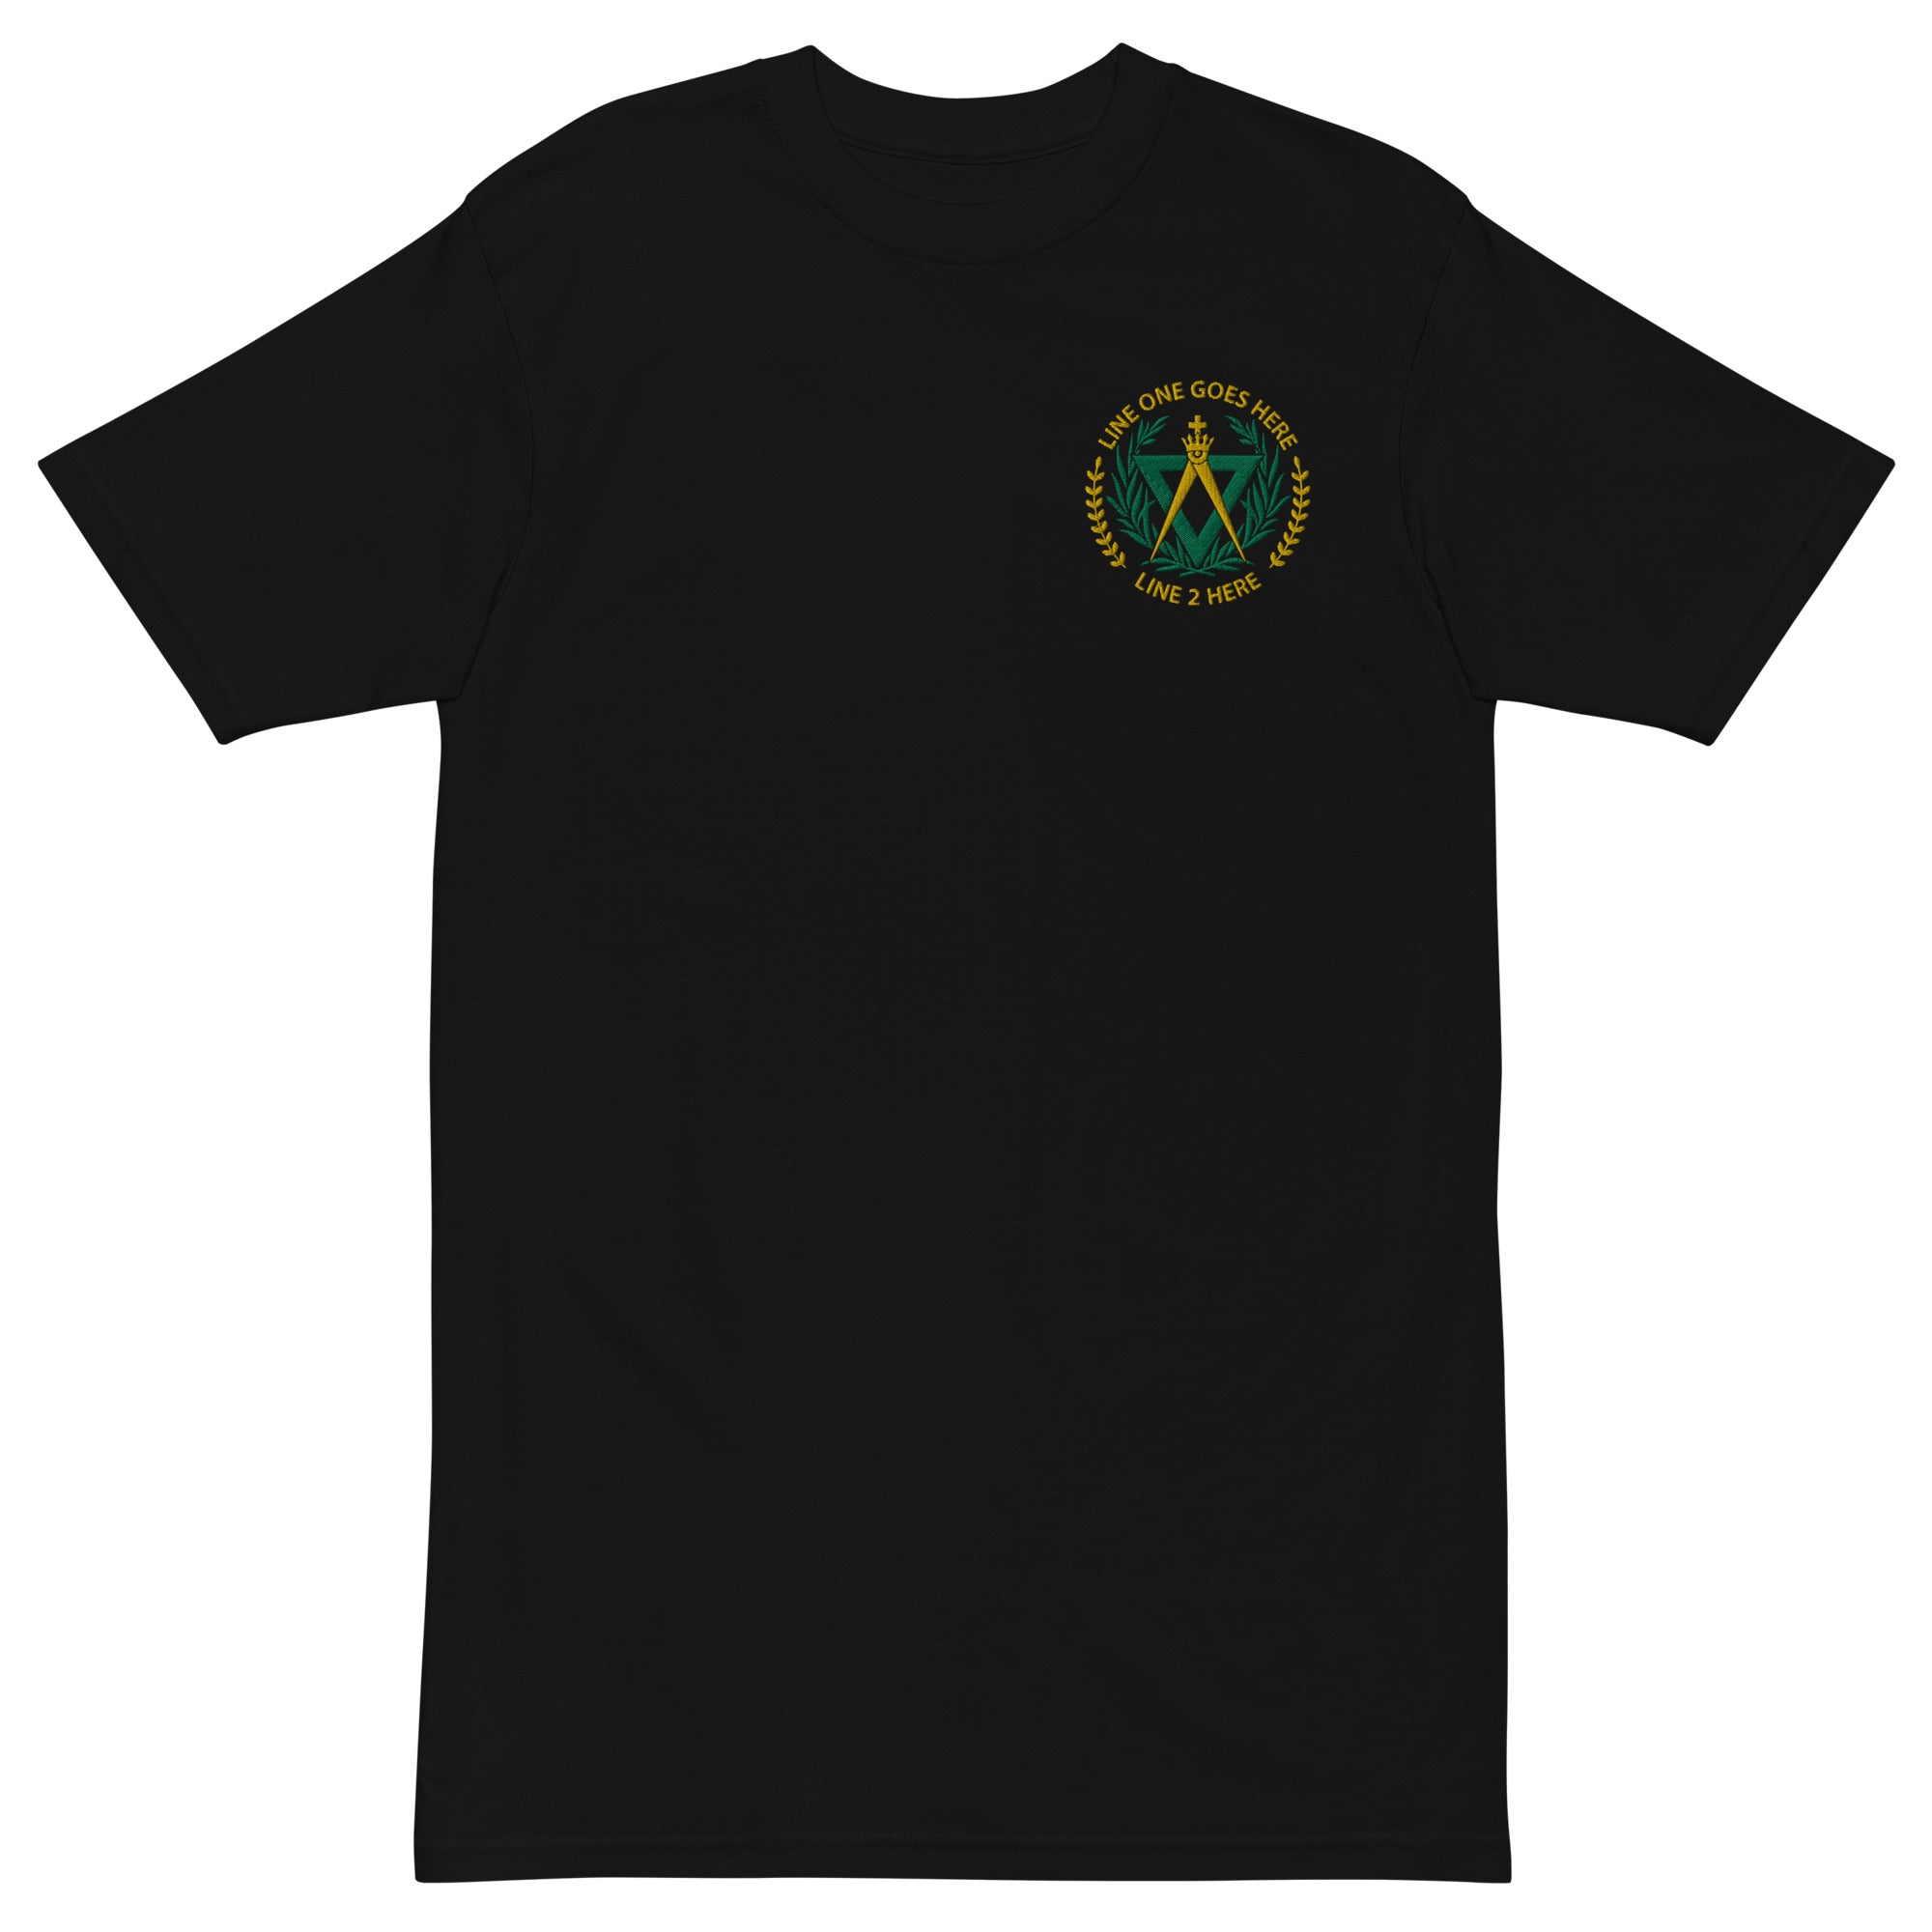 Allied Masonic Degrees T-shirts